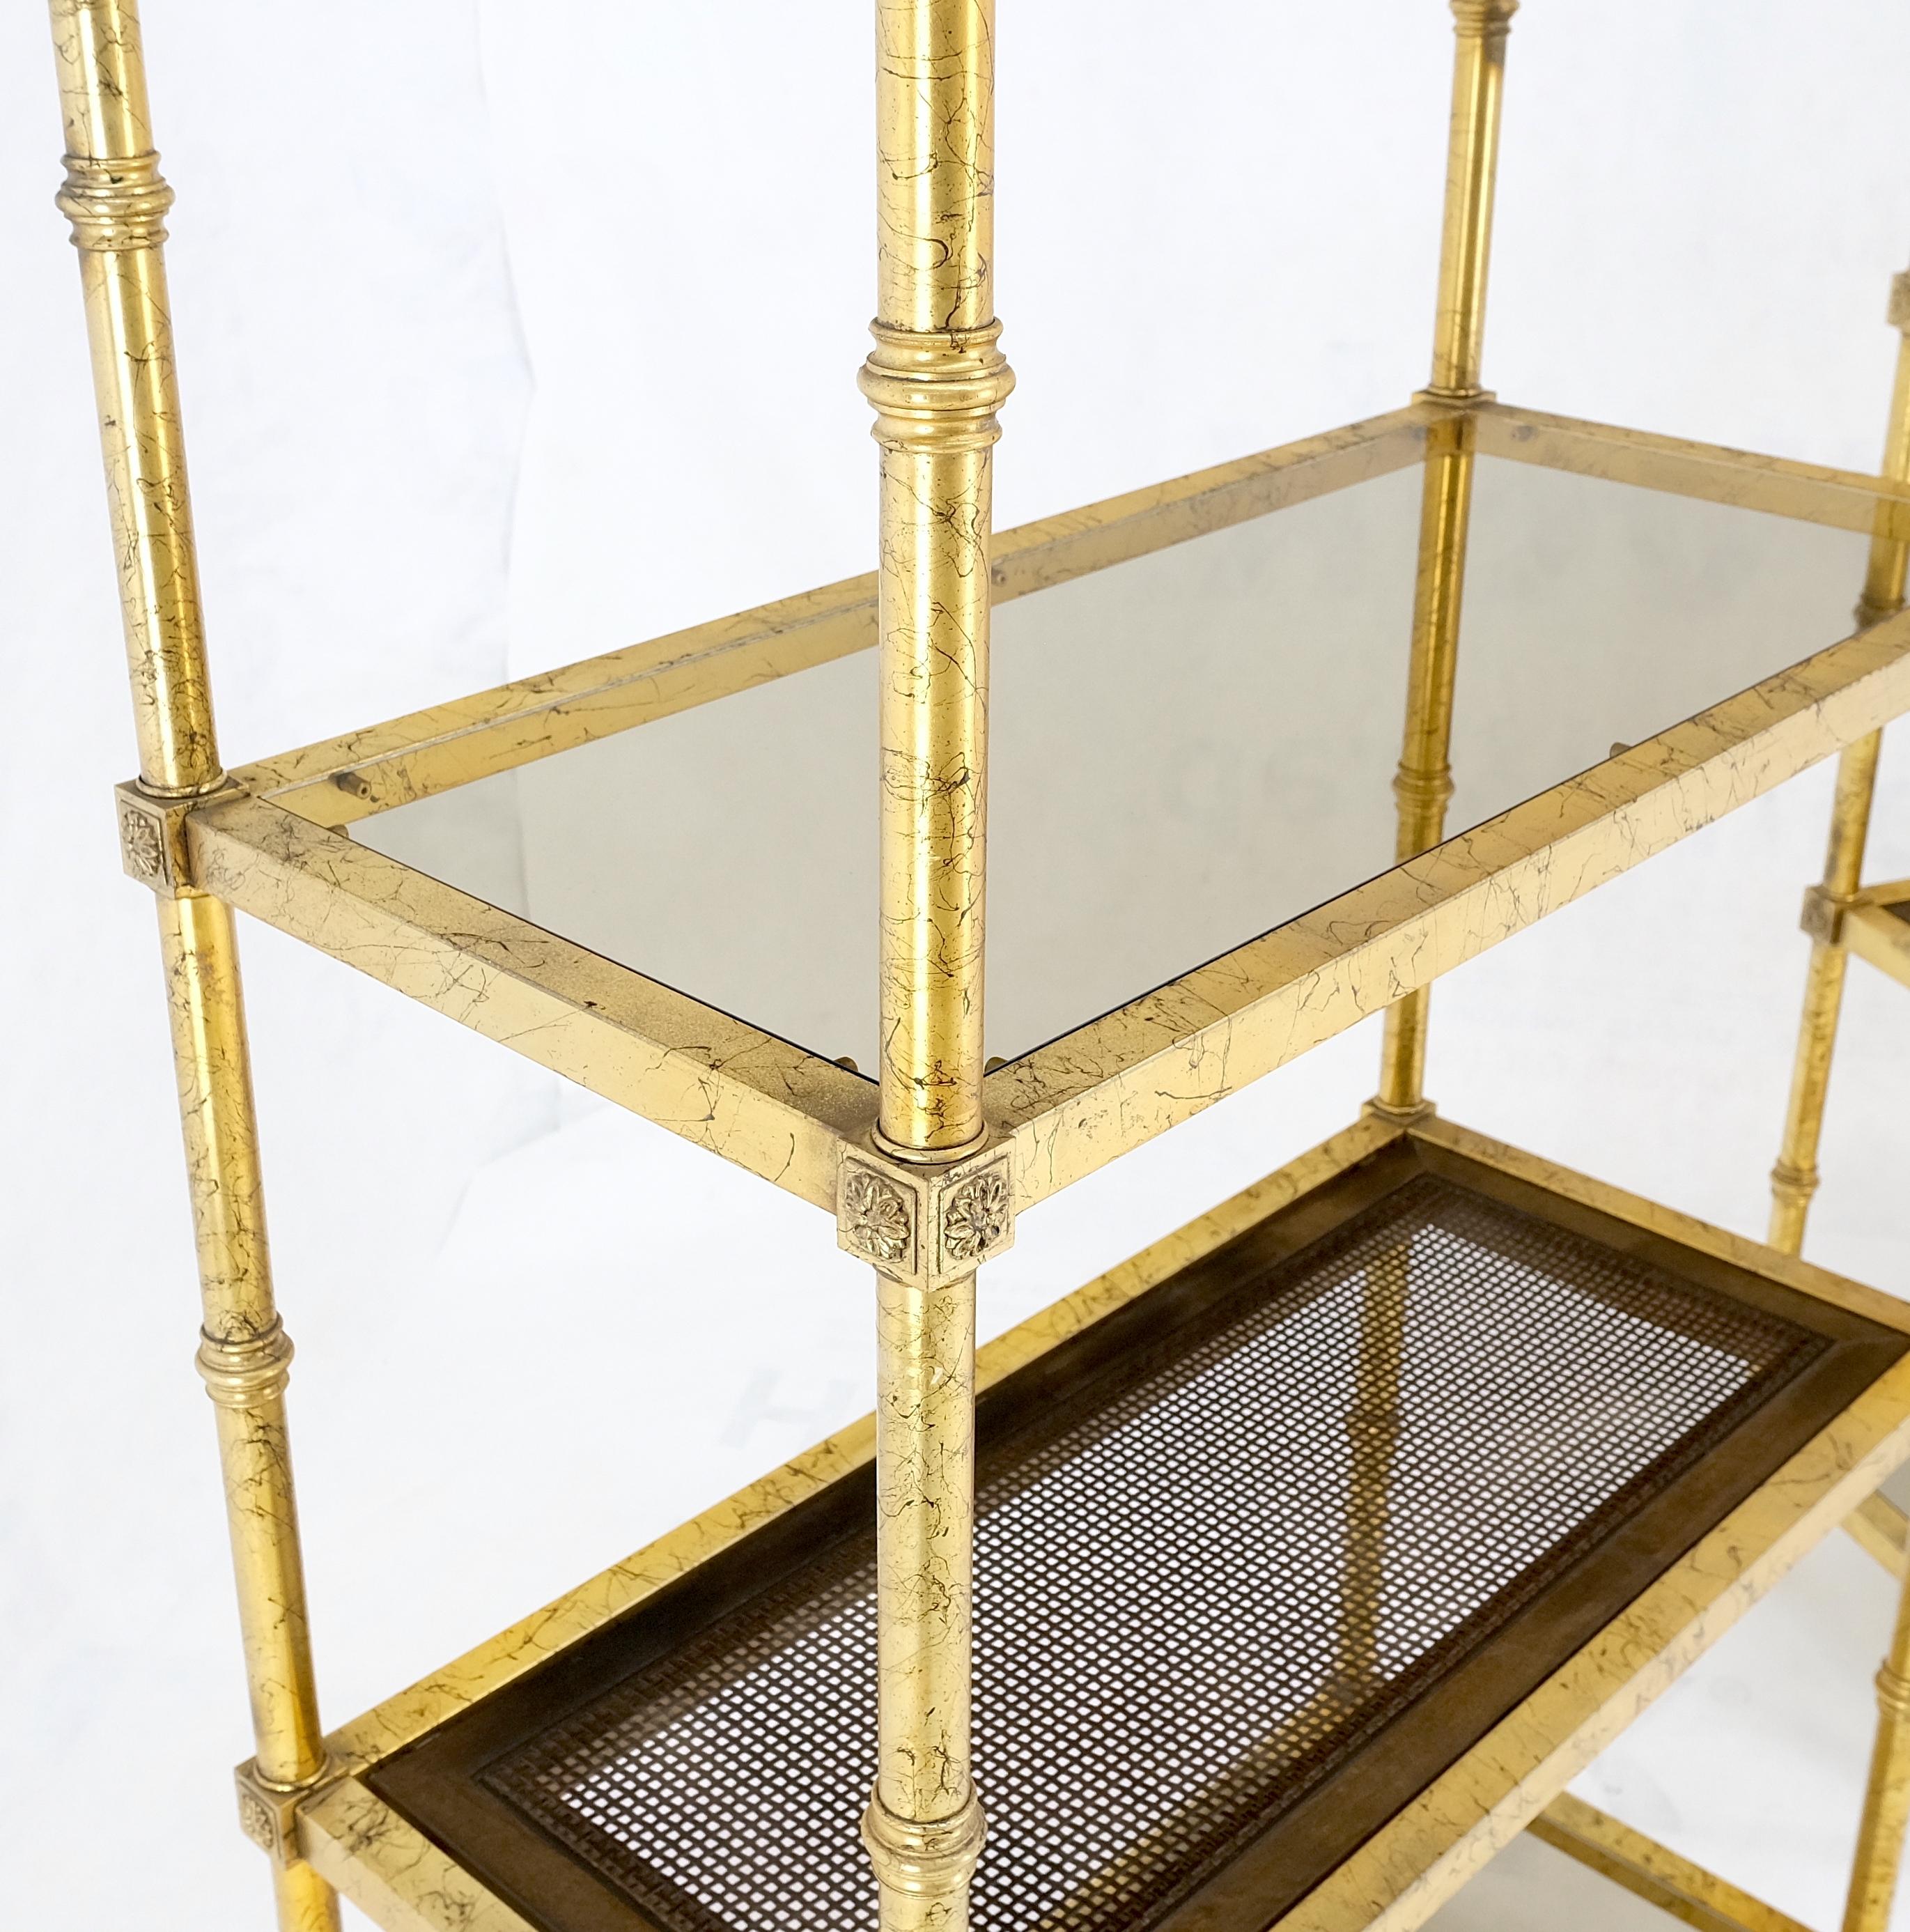 Pair of gold finish cane & glass shelf decorative etageres display wall units.